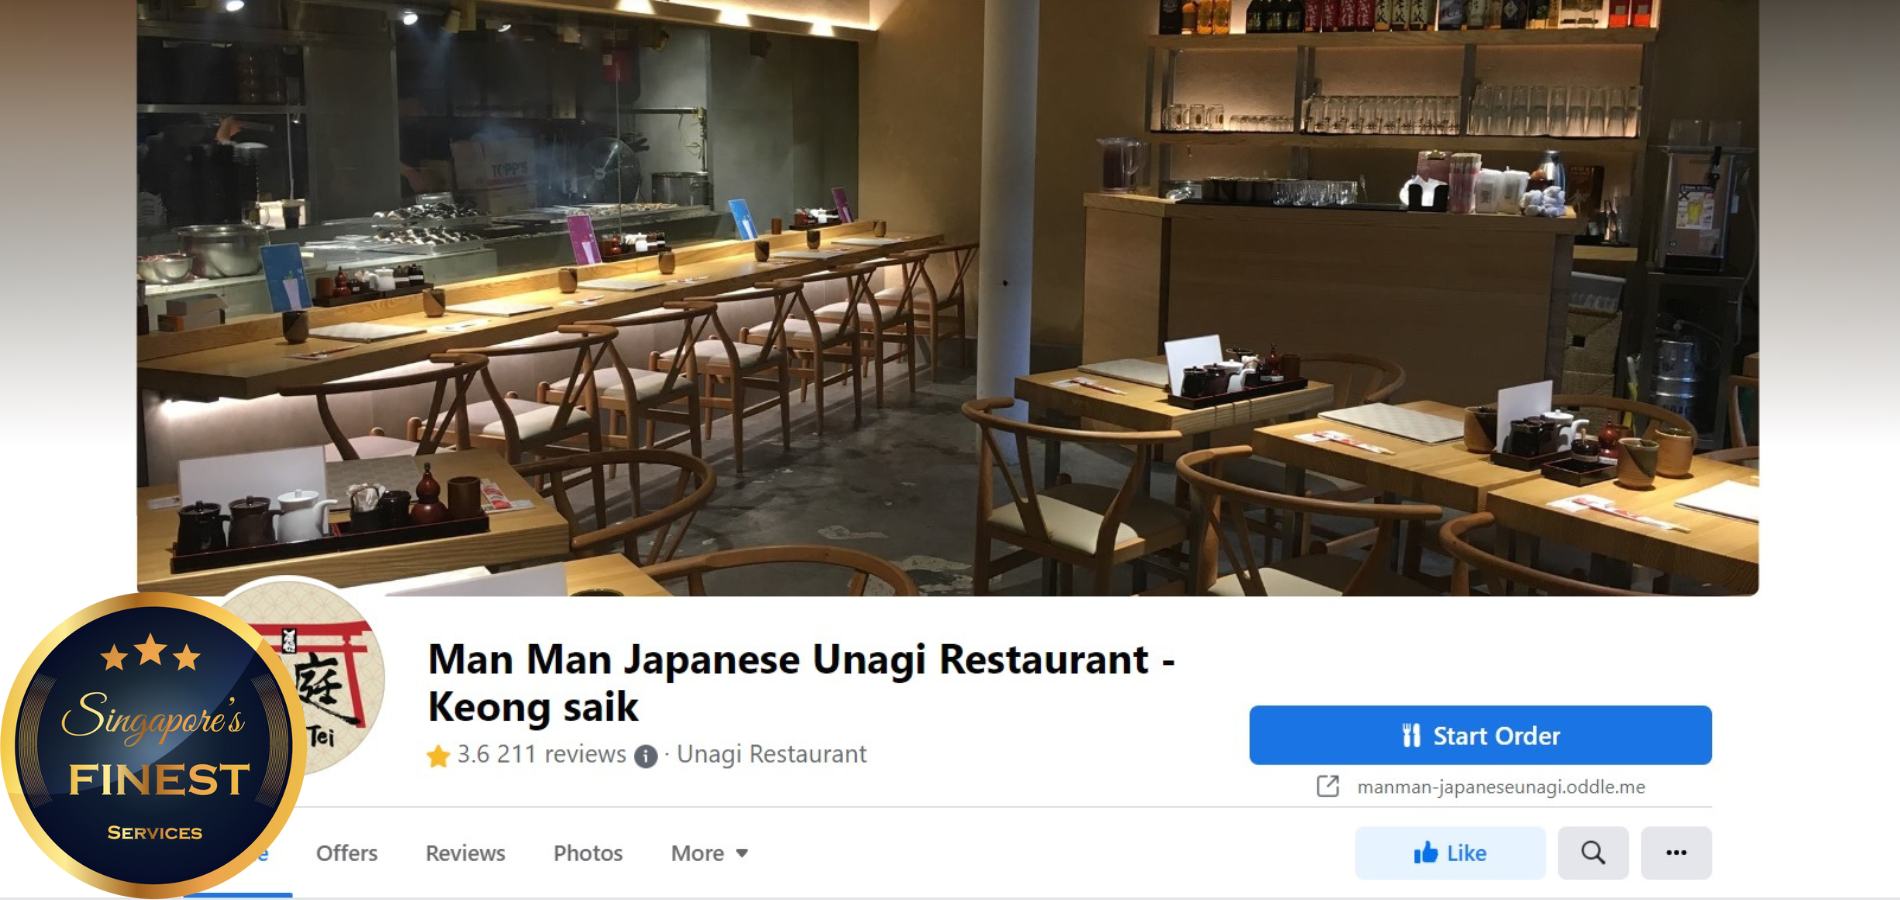 Unagi Tei Japanese Restaurant - Japanese Restaurant in Singapore